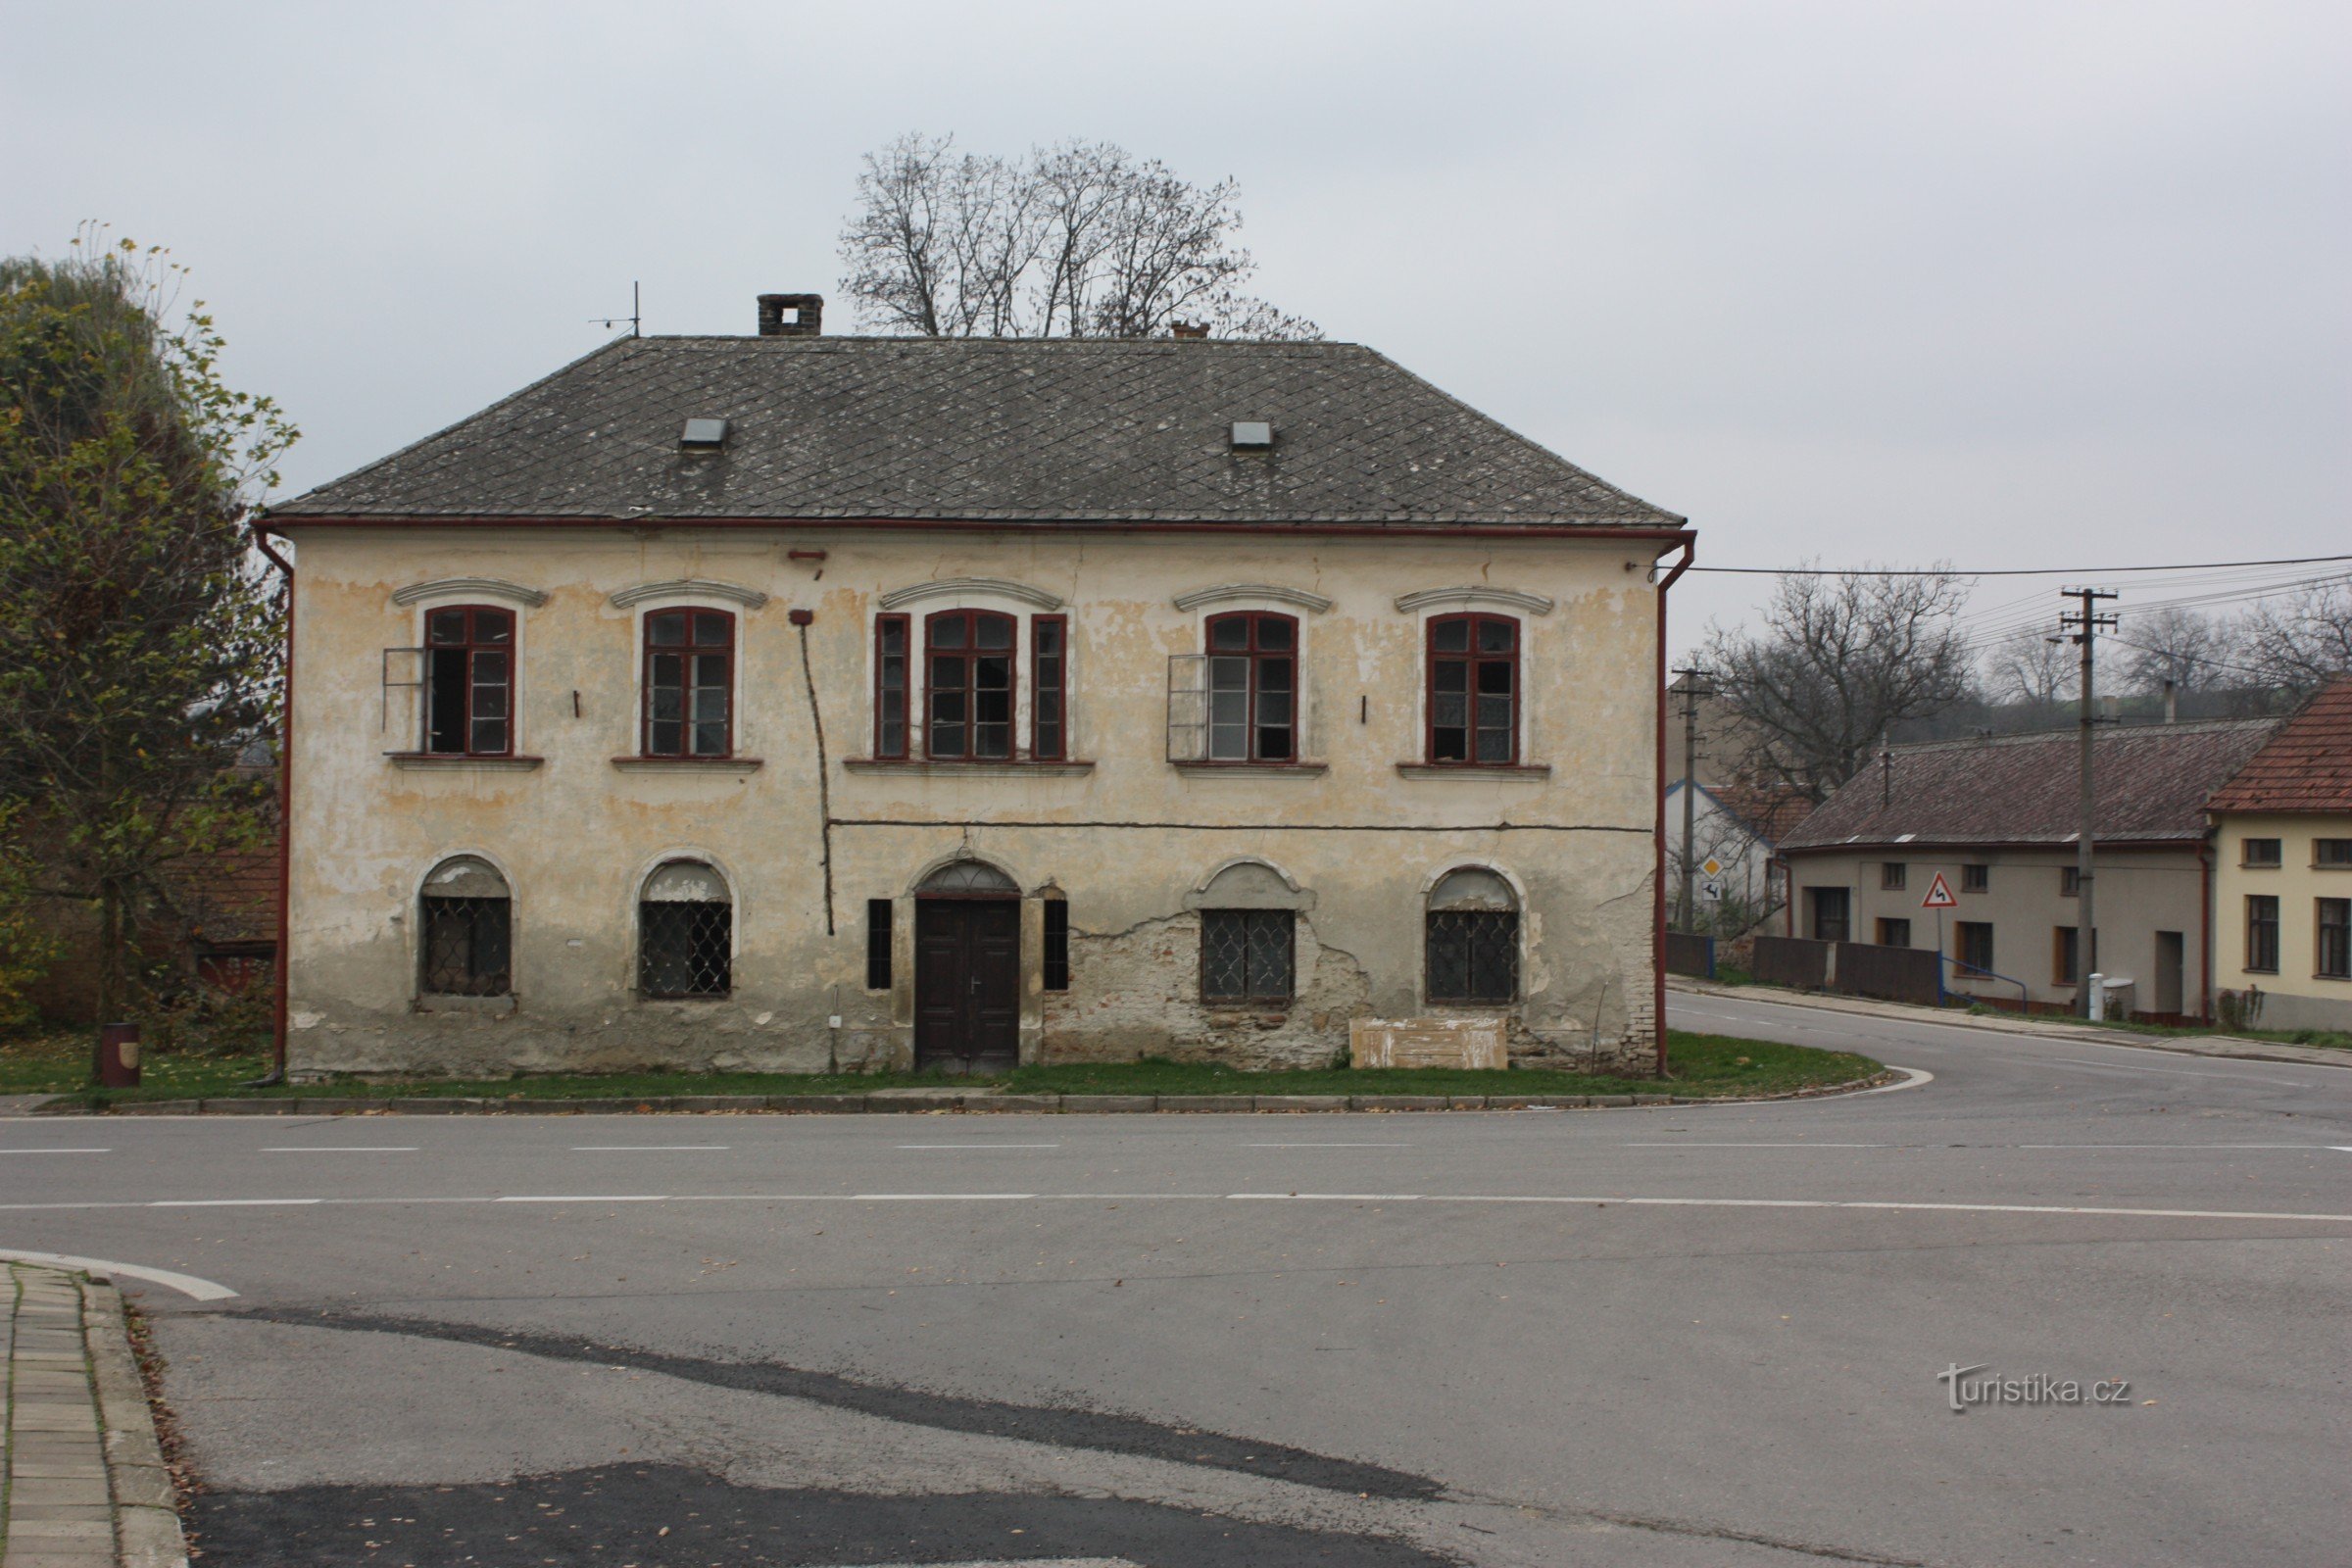 The old (original) parsonage in Bohdalice